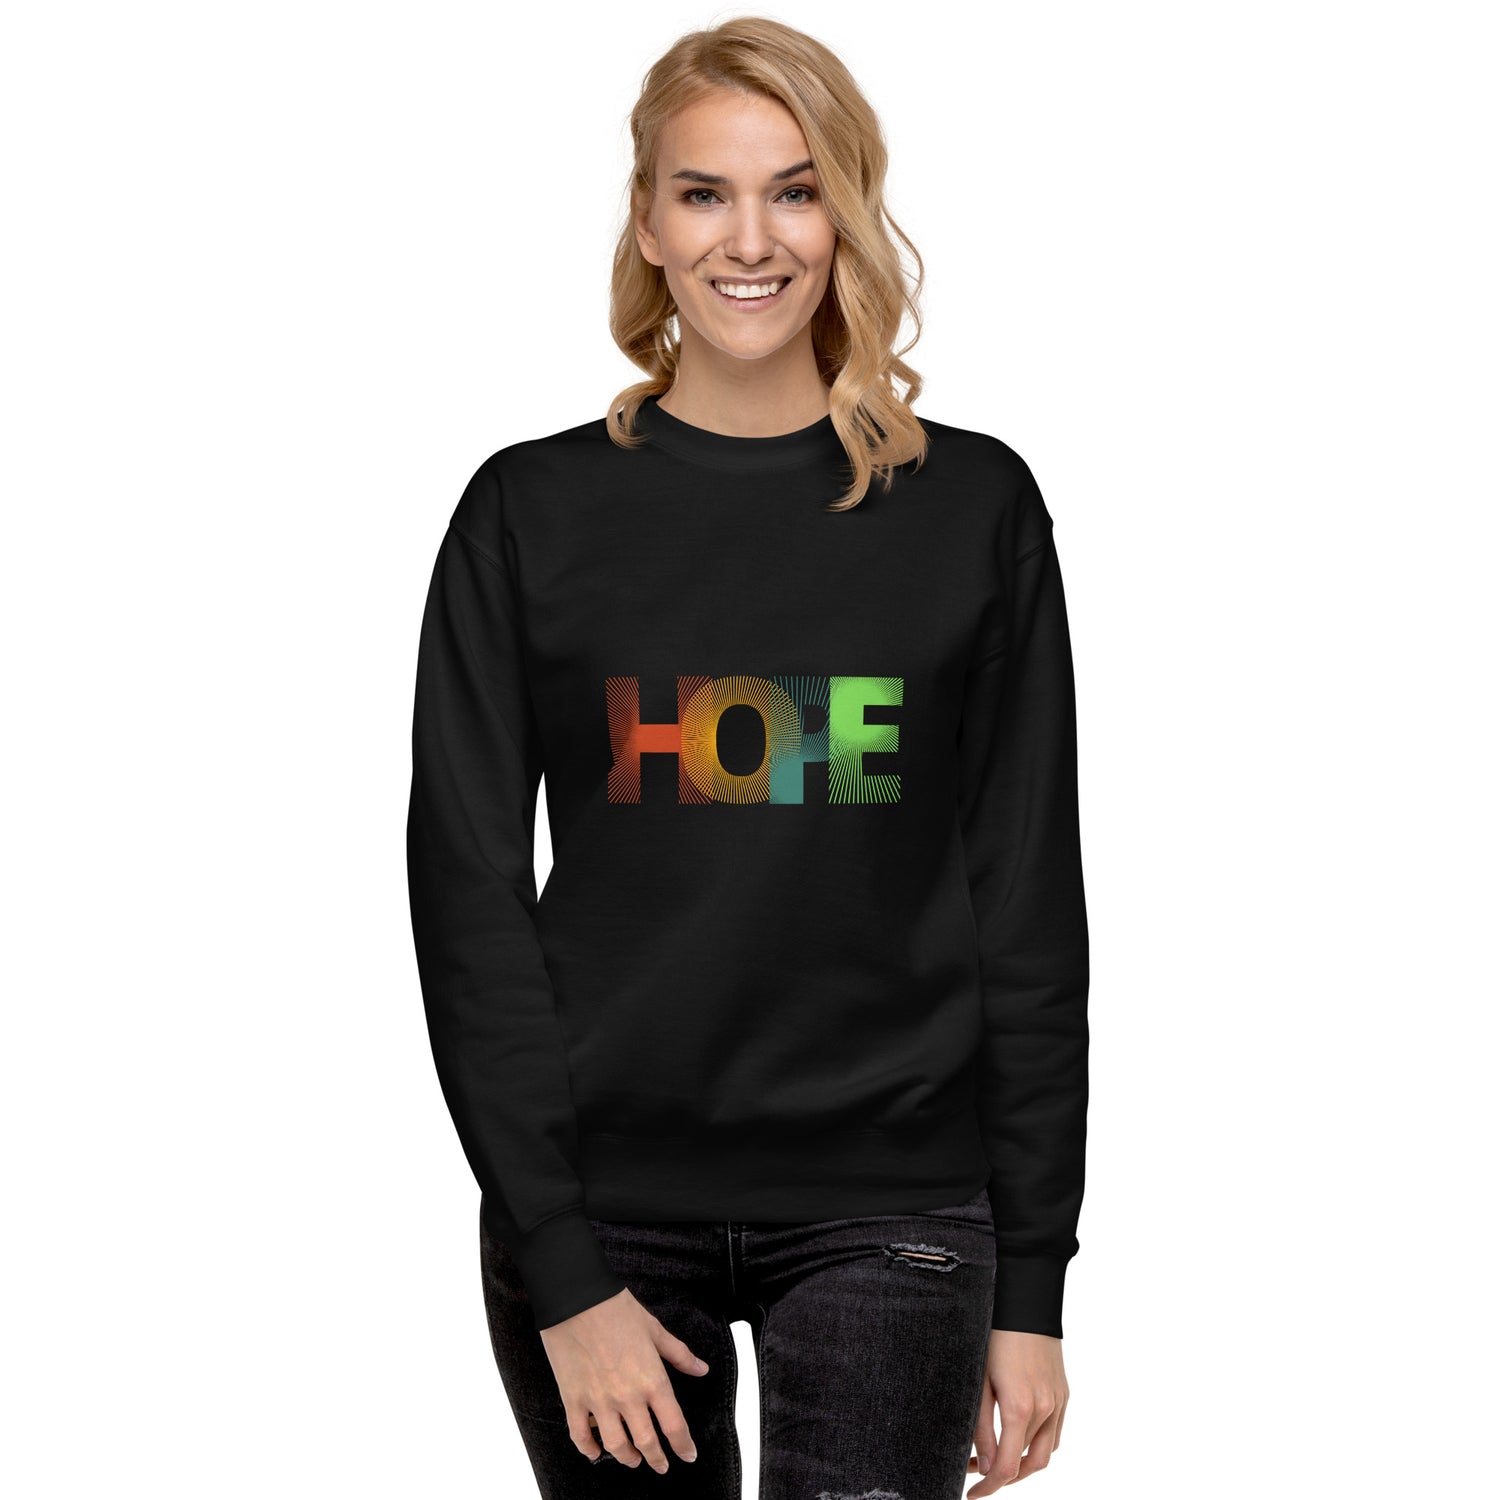 Unisex Premium Sweatshirt - Hope - Refine Zone